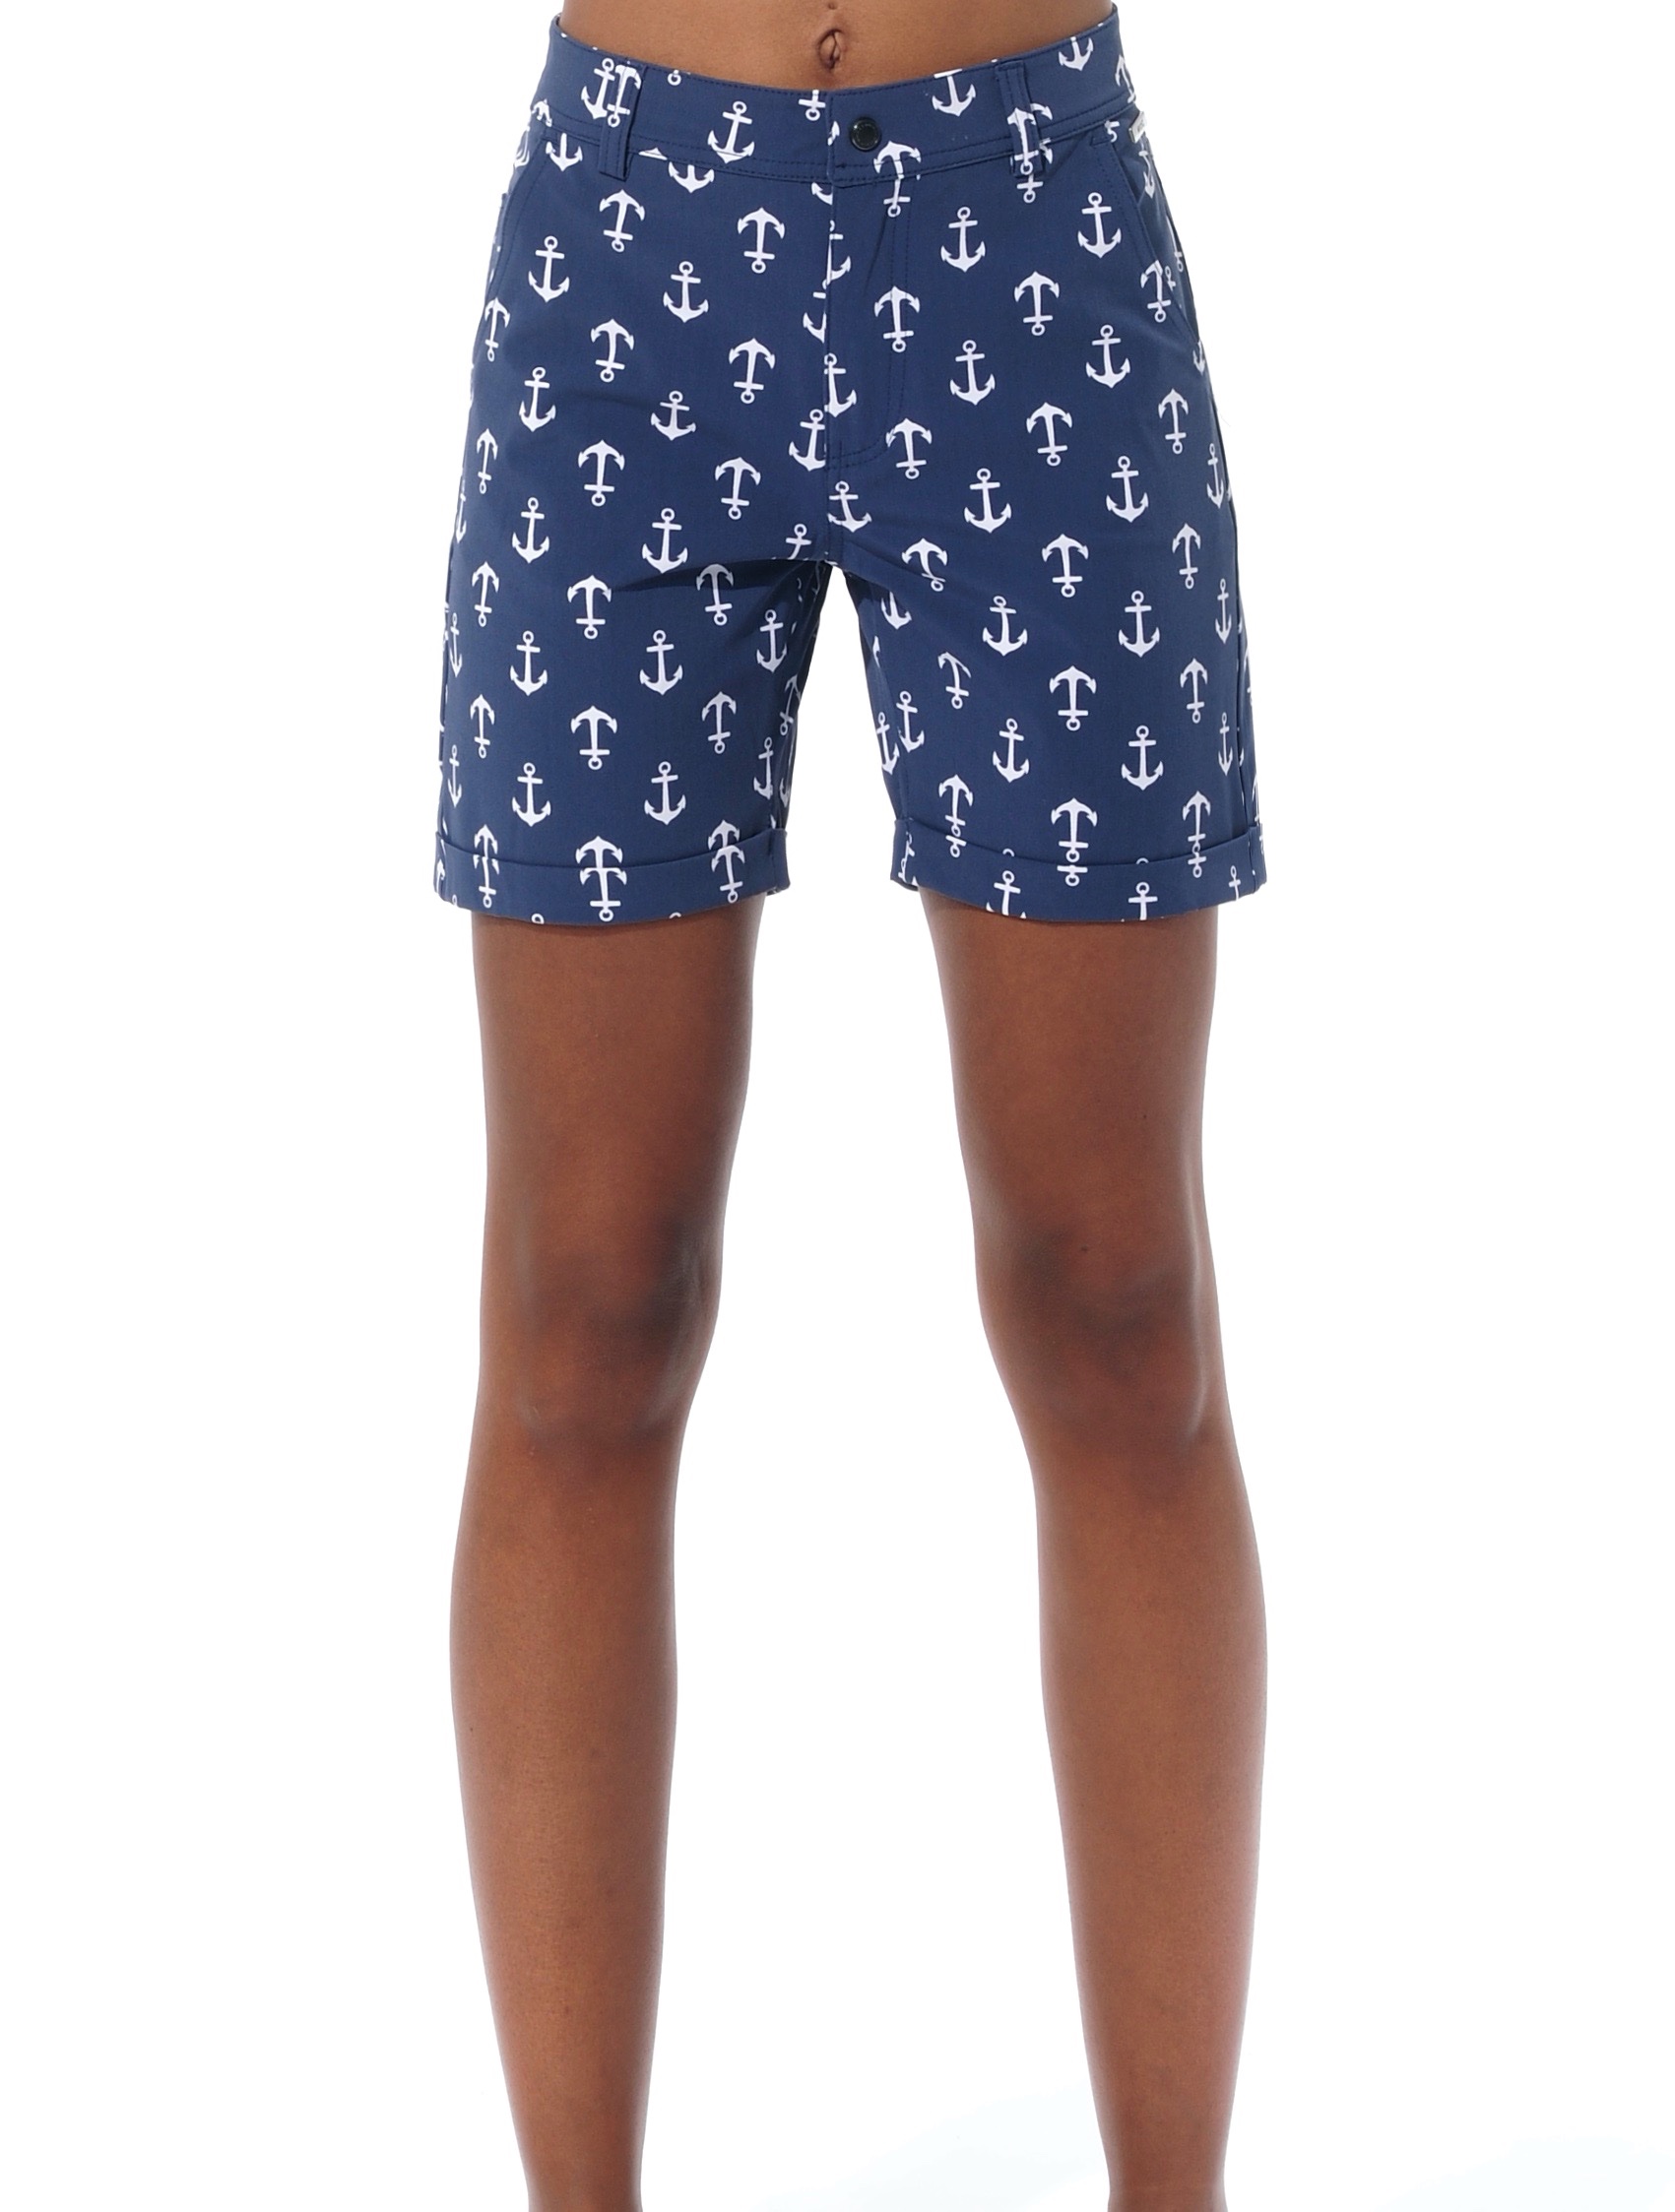 4way stretch print shorts navy 